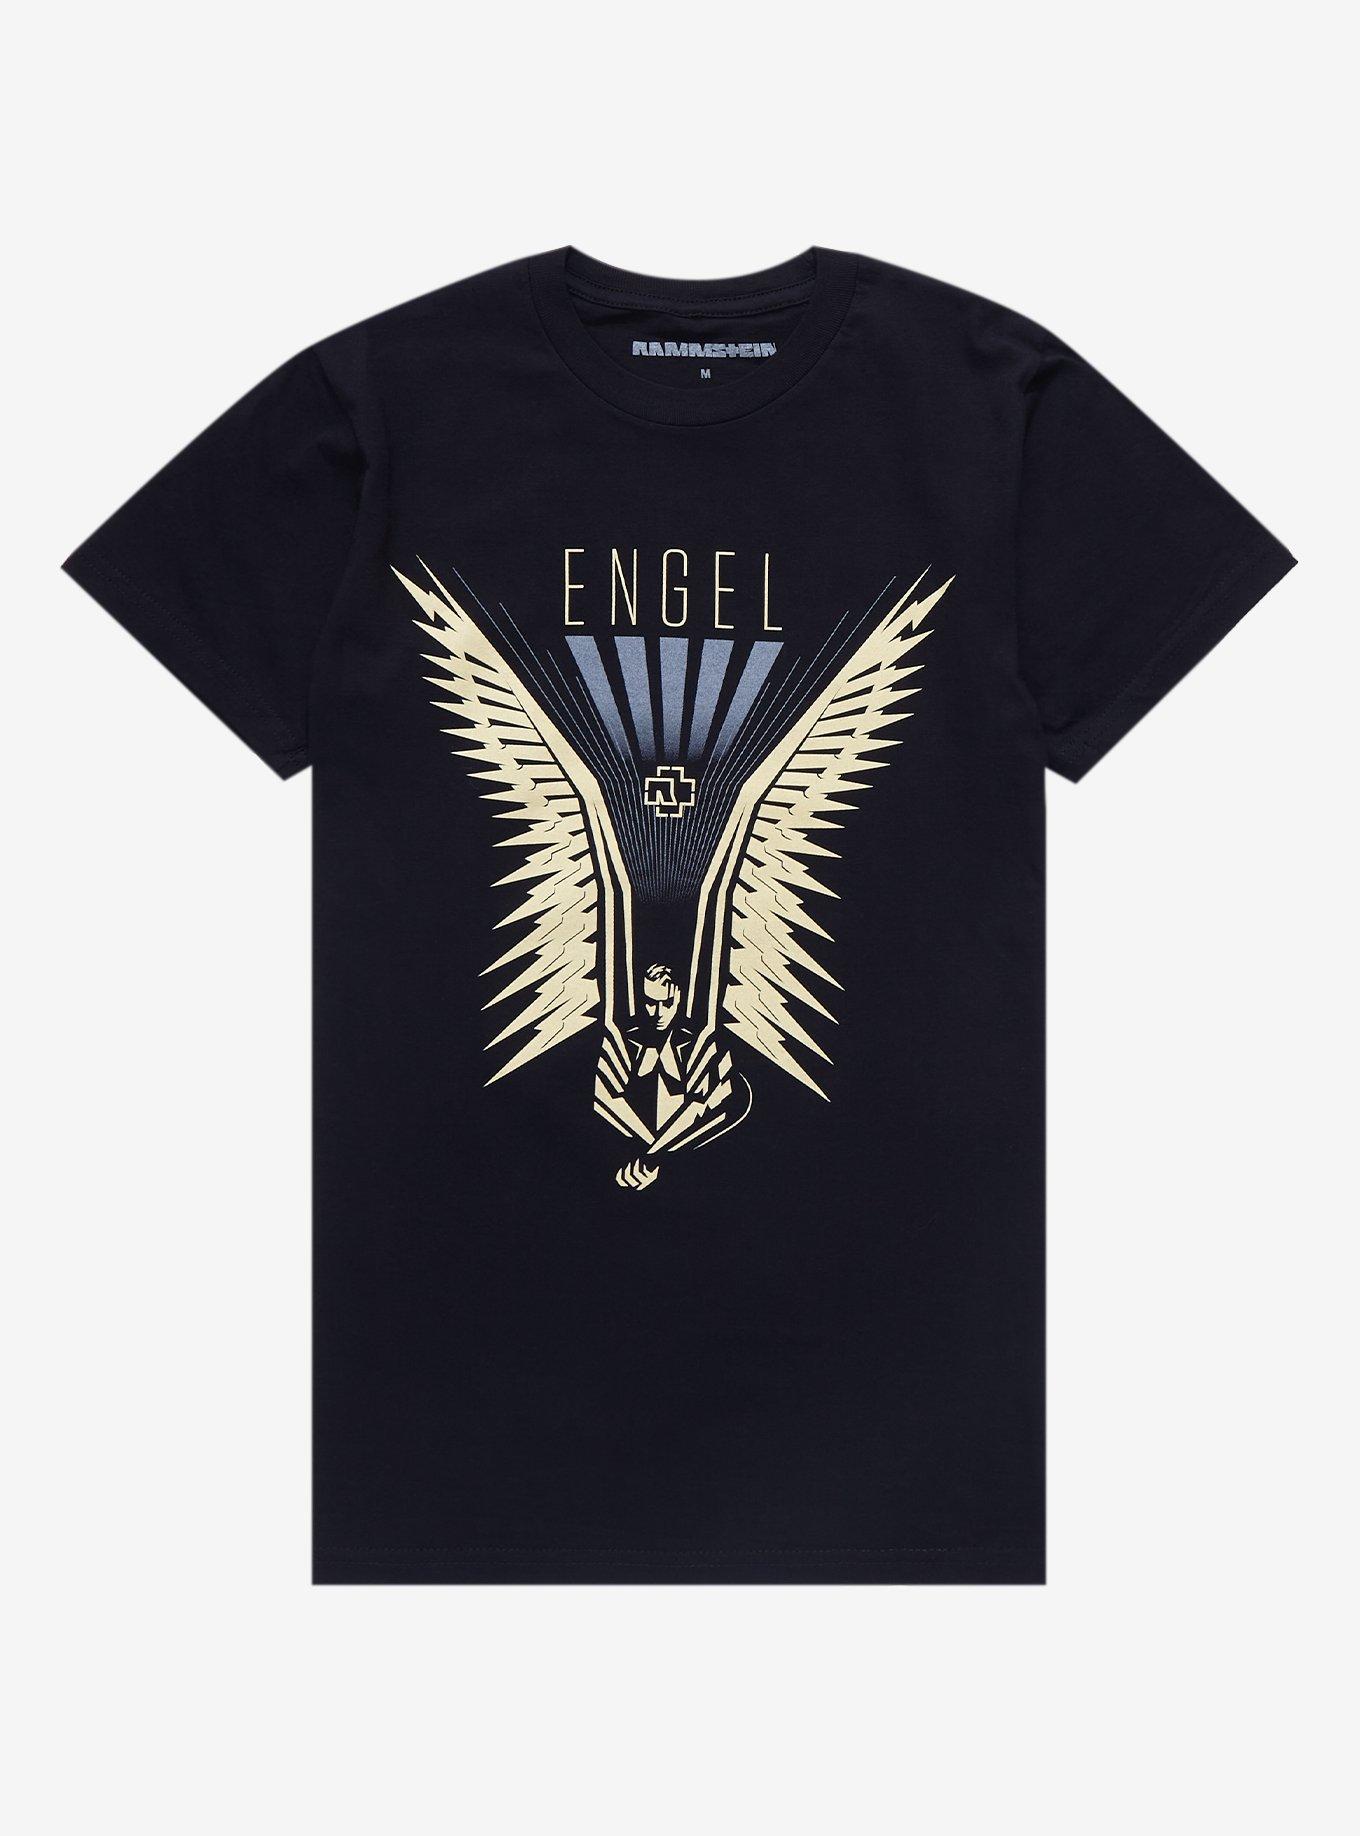 Rammstein Engel Boyfriend Fit Girls T-Shirt